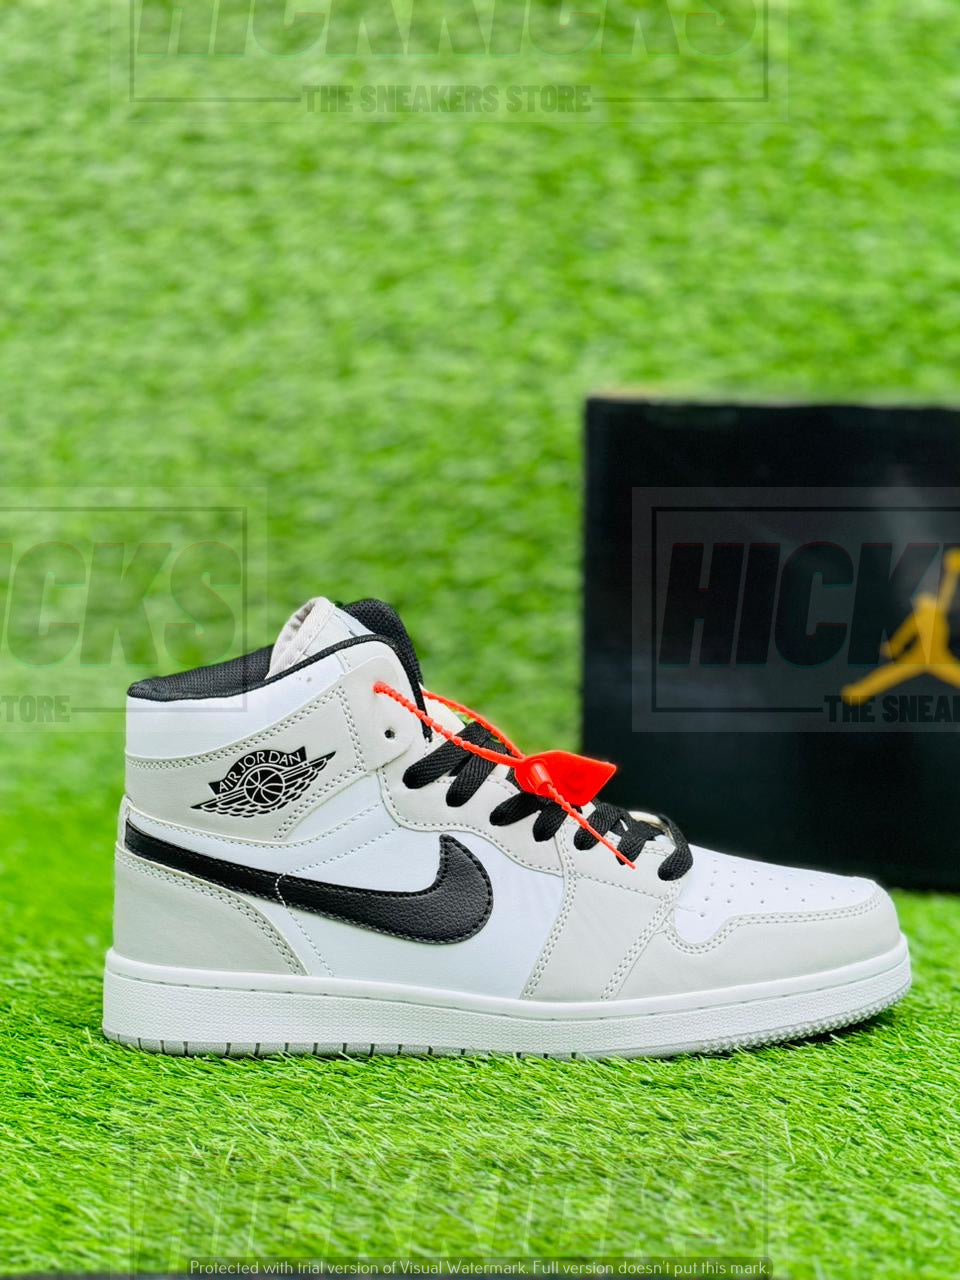 Nike Air Jordan 1 Retro High Smoky Light Premium Batch